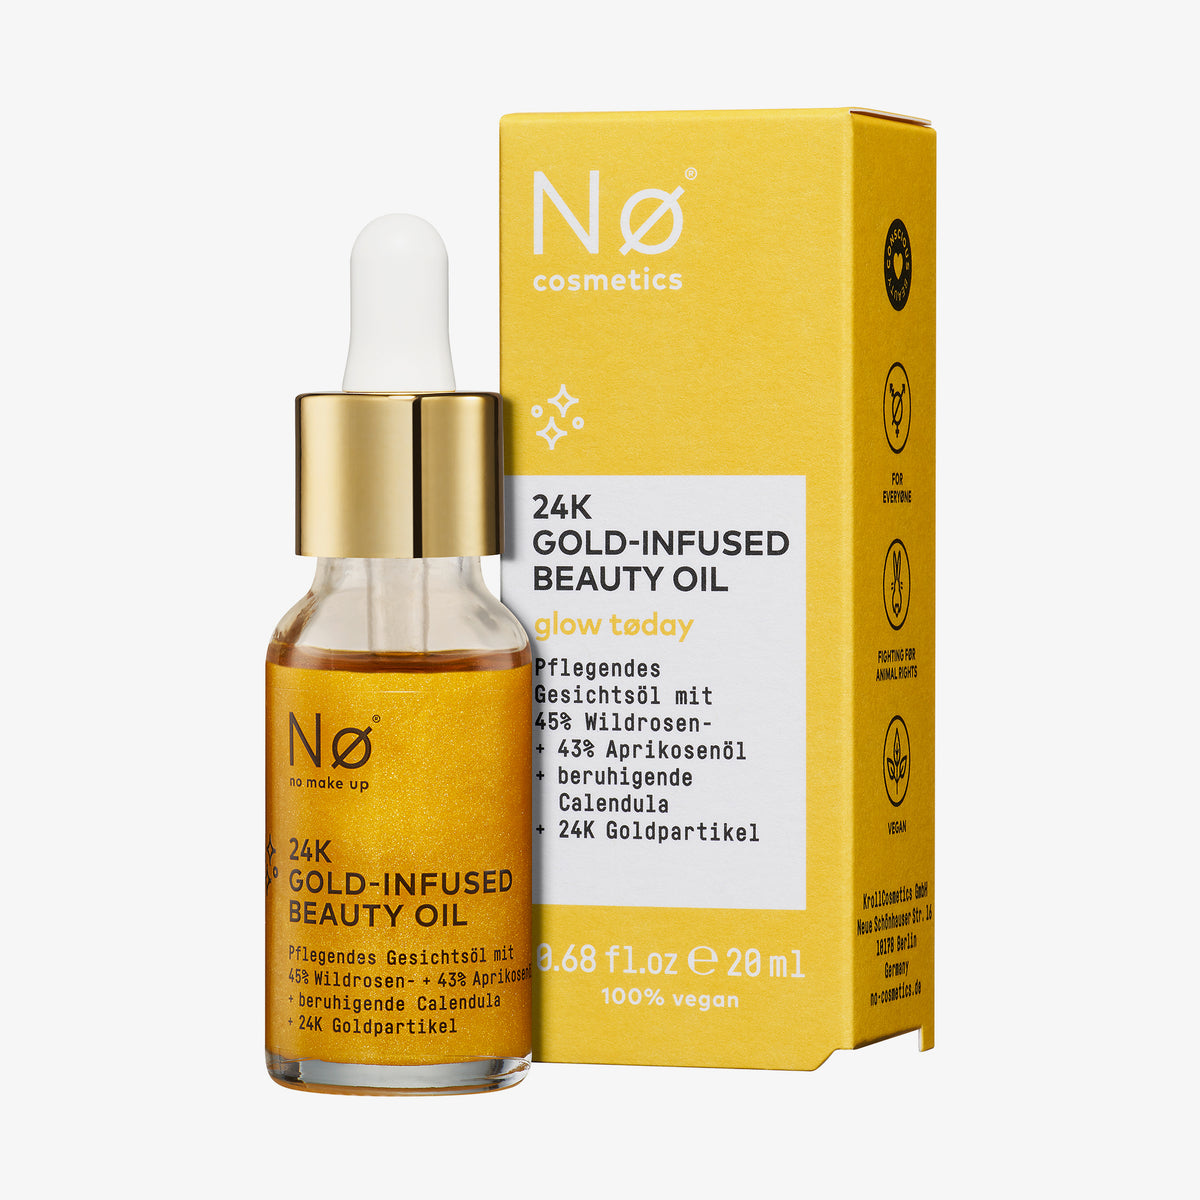 Nø Cosmetics | glow tøday 24K Gold-Infused Beauty Oil